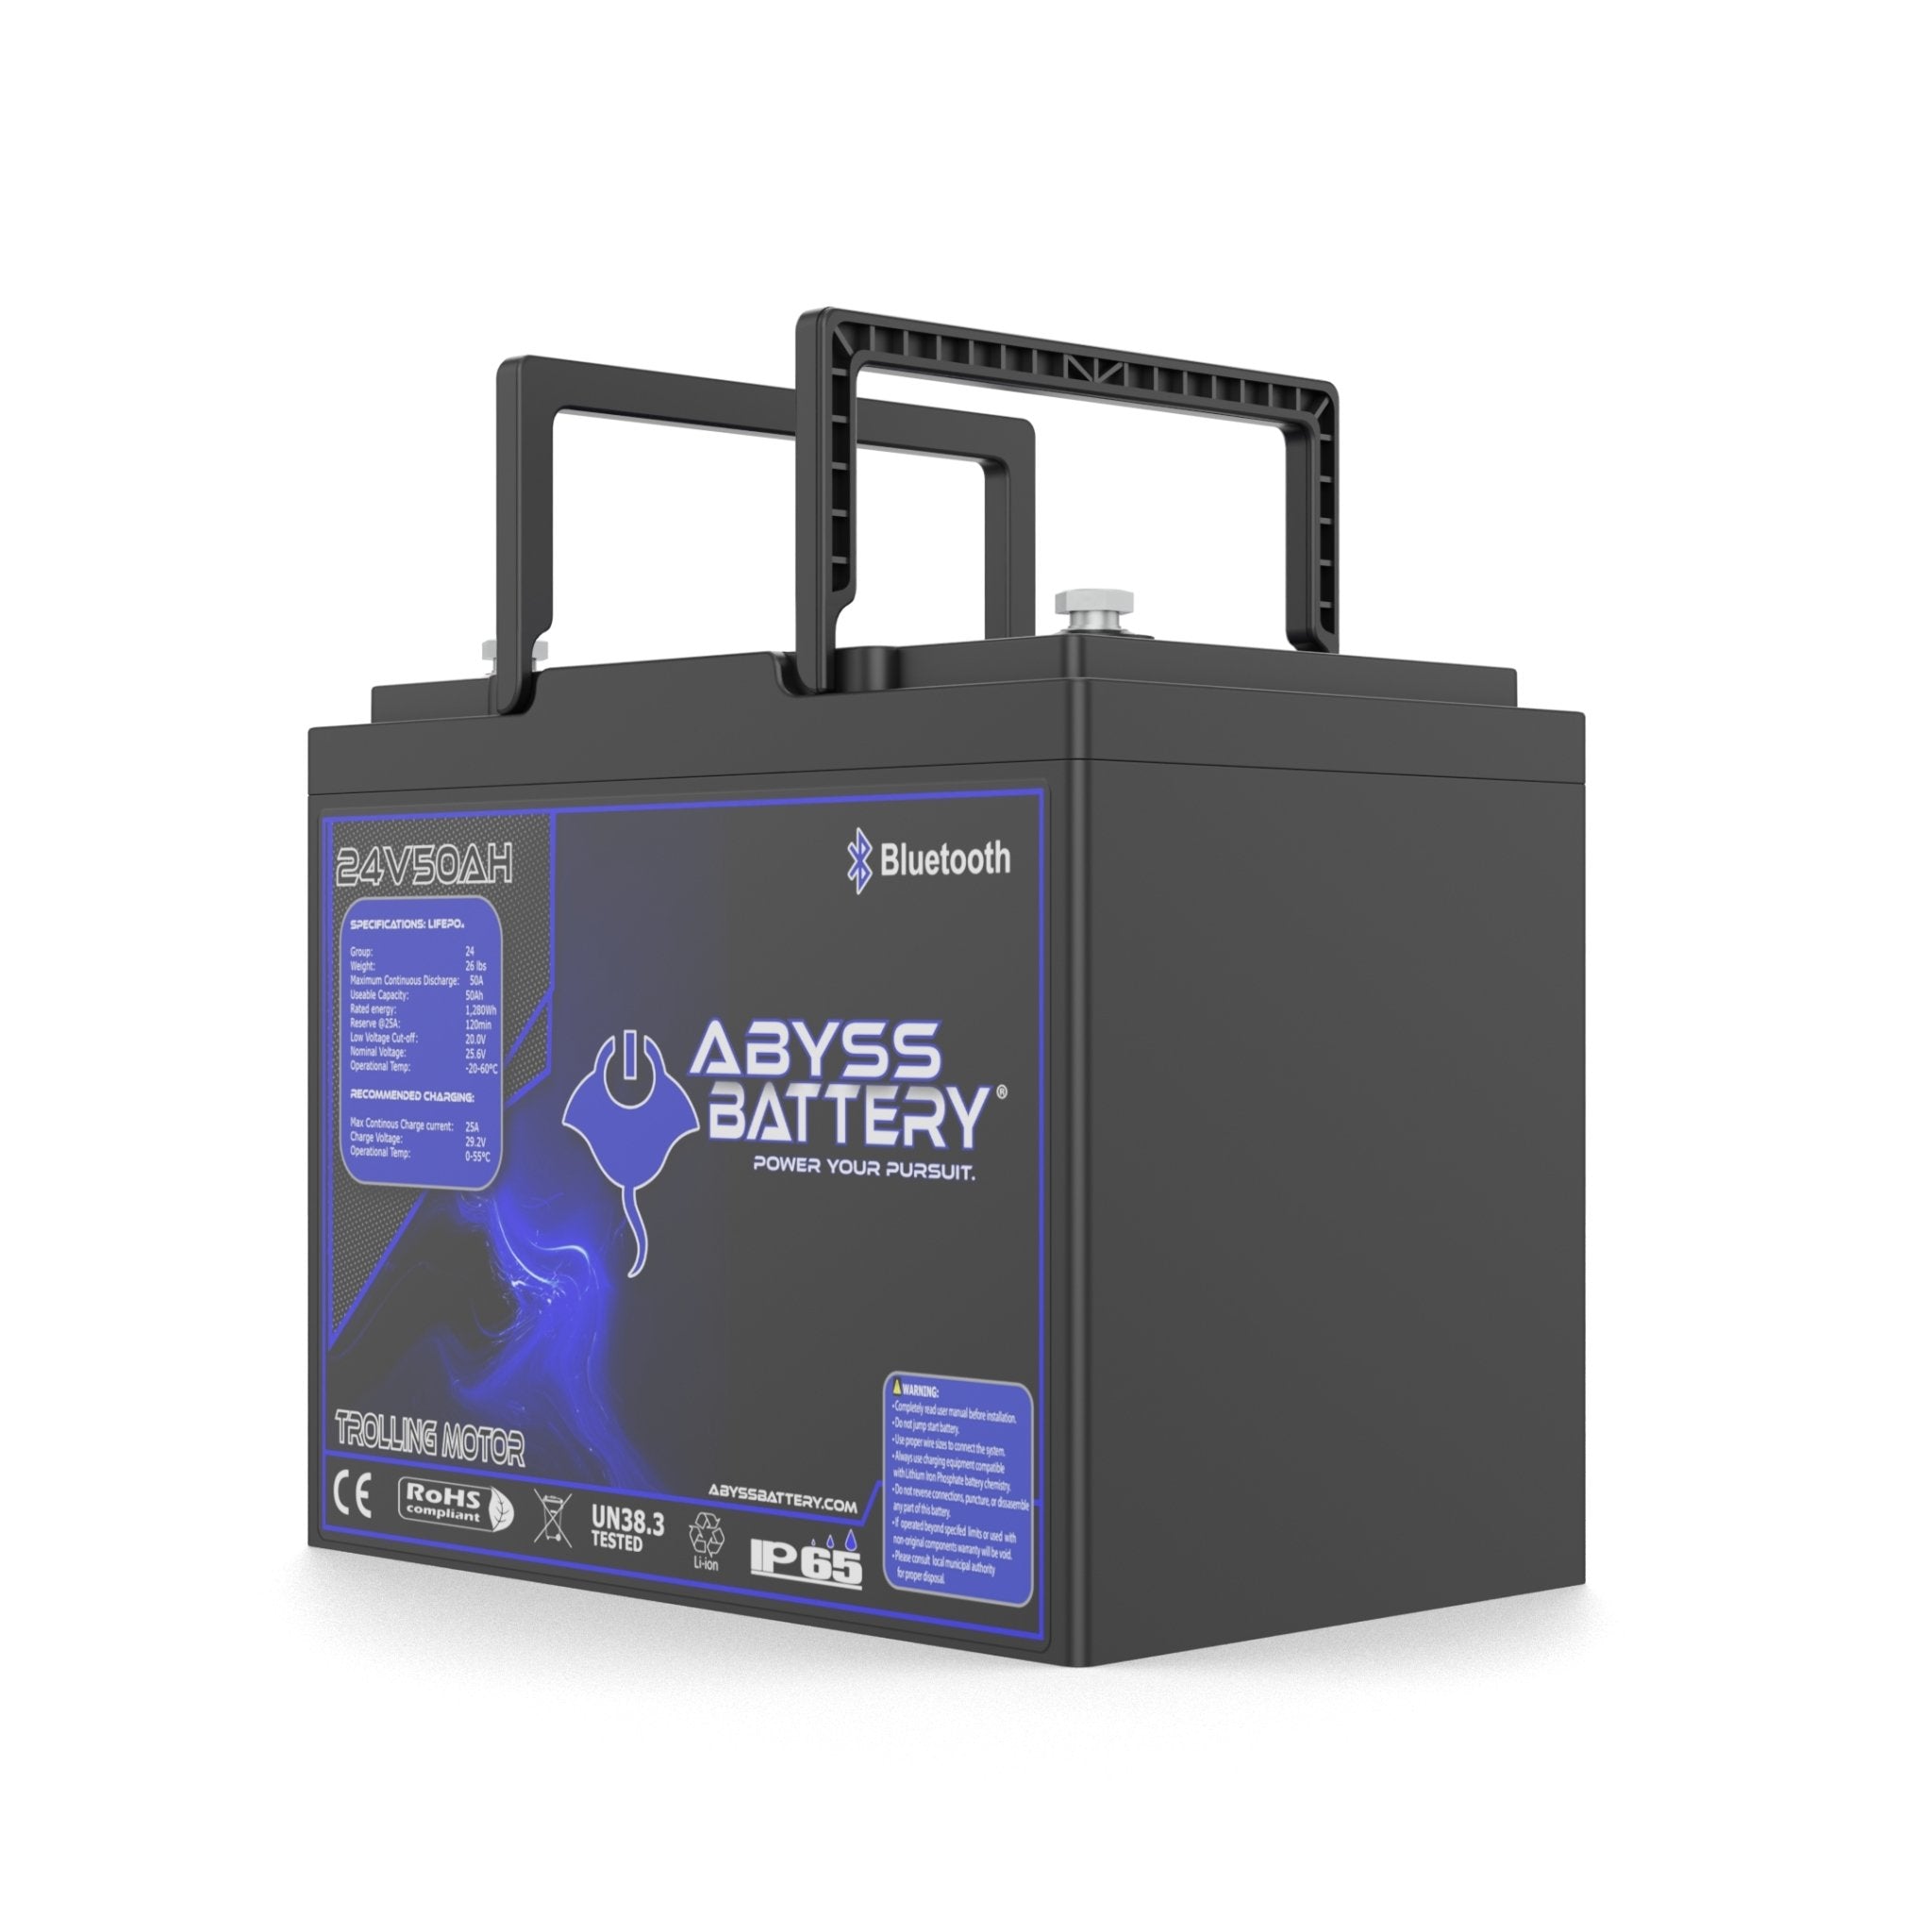 Abyss Battery 24V 50Ah Lithium Trolling Motor Battery